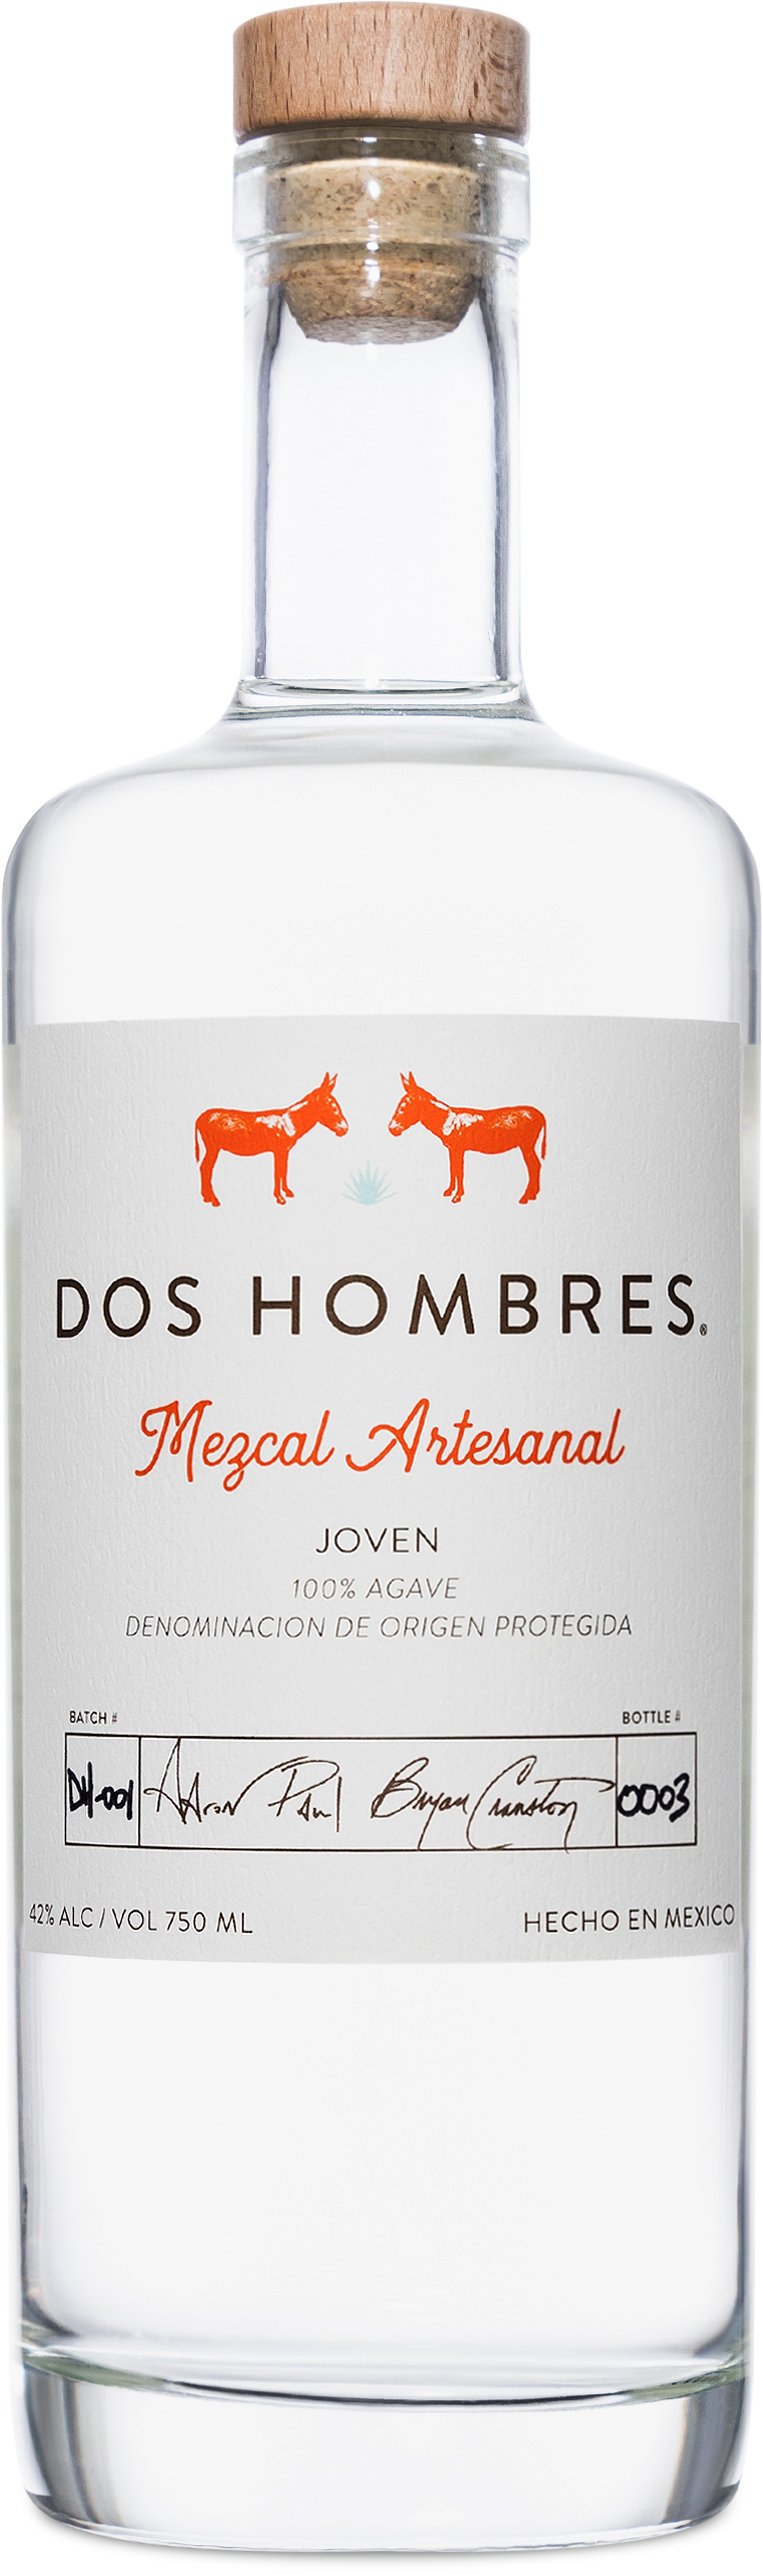 Dos Hombres Mezcal Artesanal Joven | 750 ml Bottle